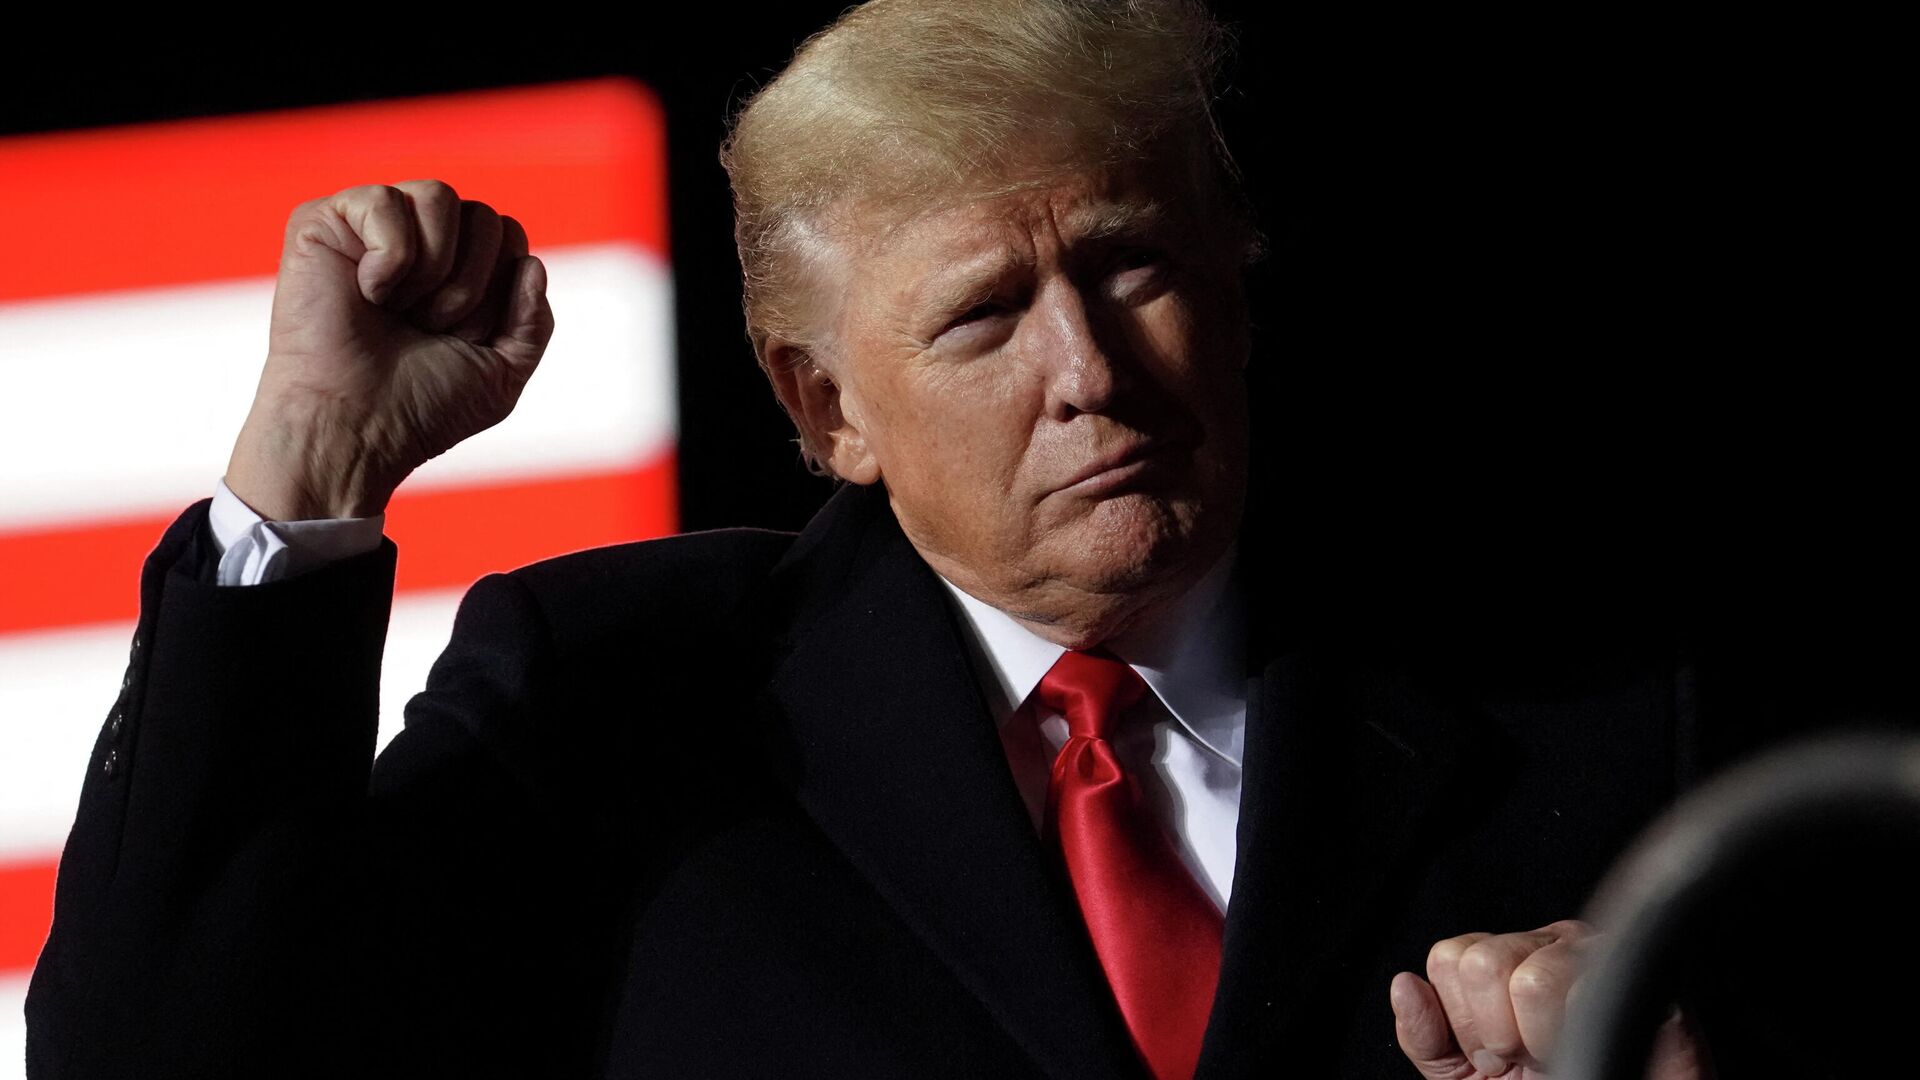 Former U.S. President Donald Trump gestures as he speaks during a rally, in Conroe, Texas, U.S., January 29, 2022 - Sputnik International, 1920, 31.01.2022